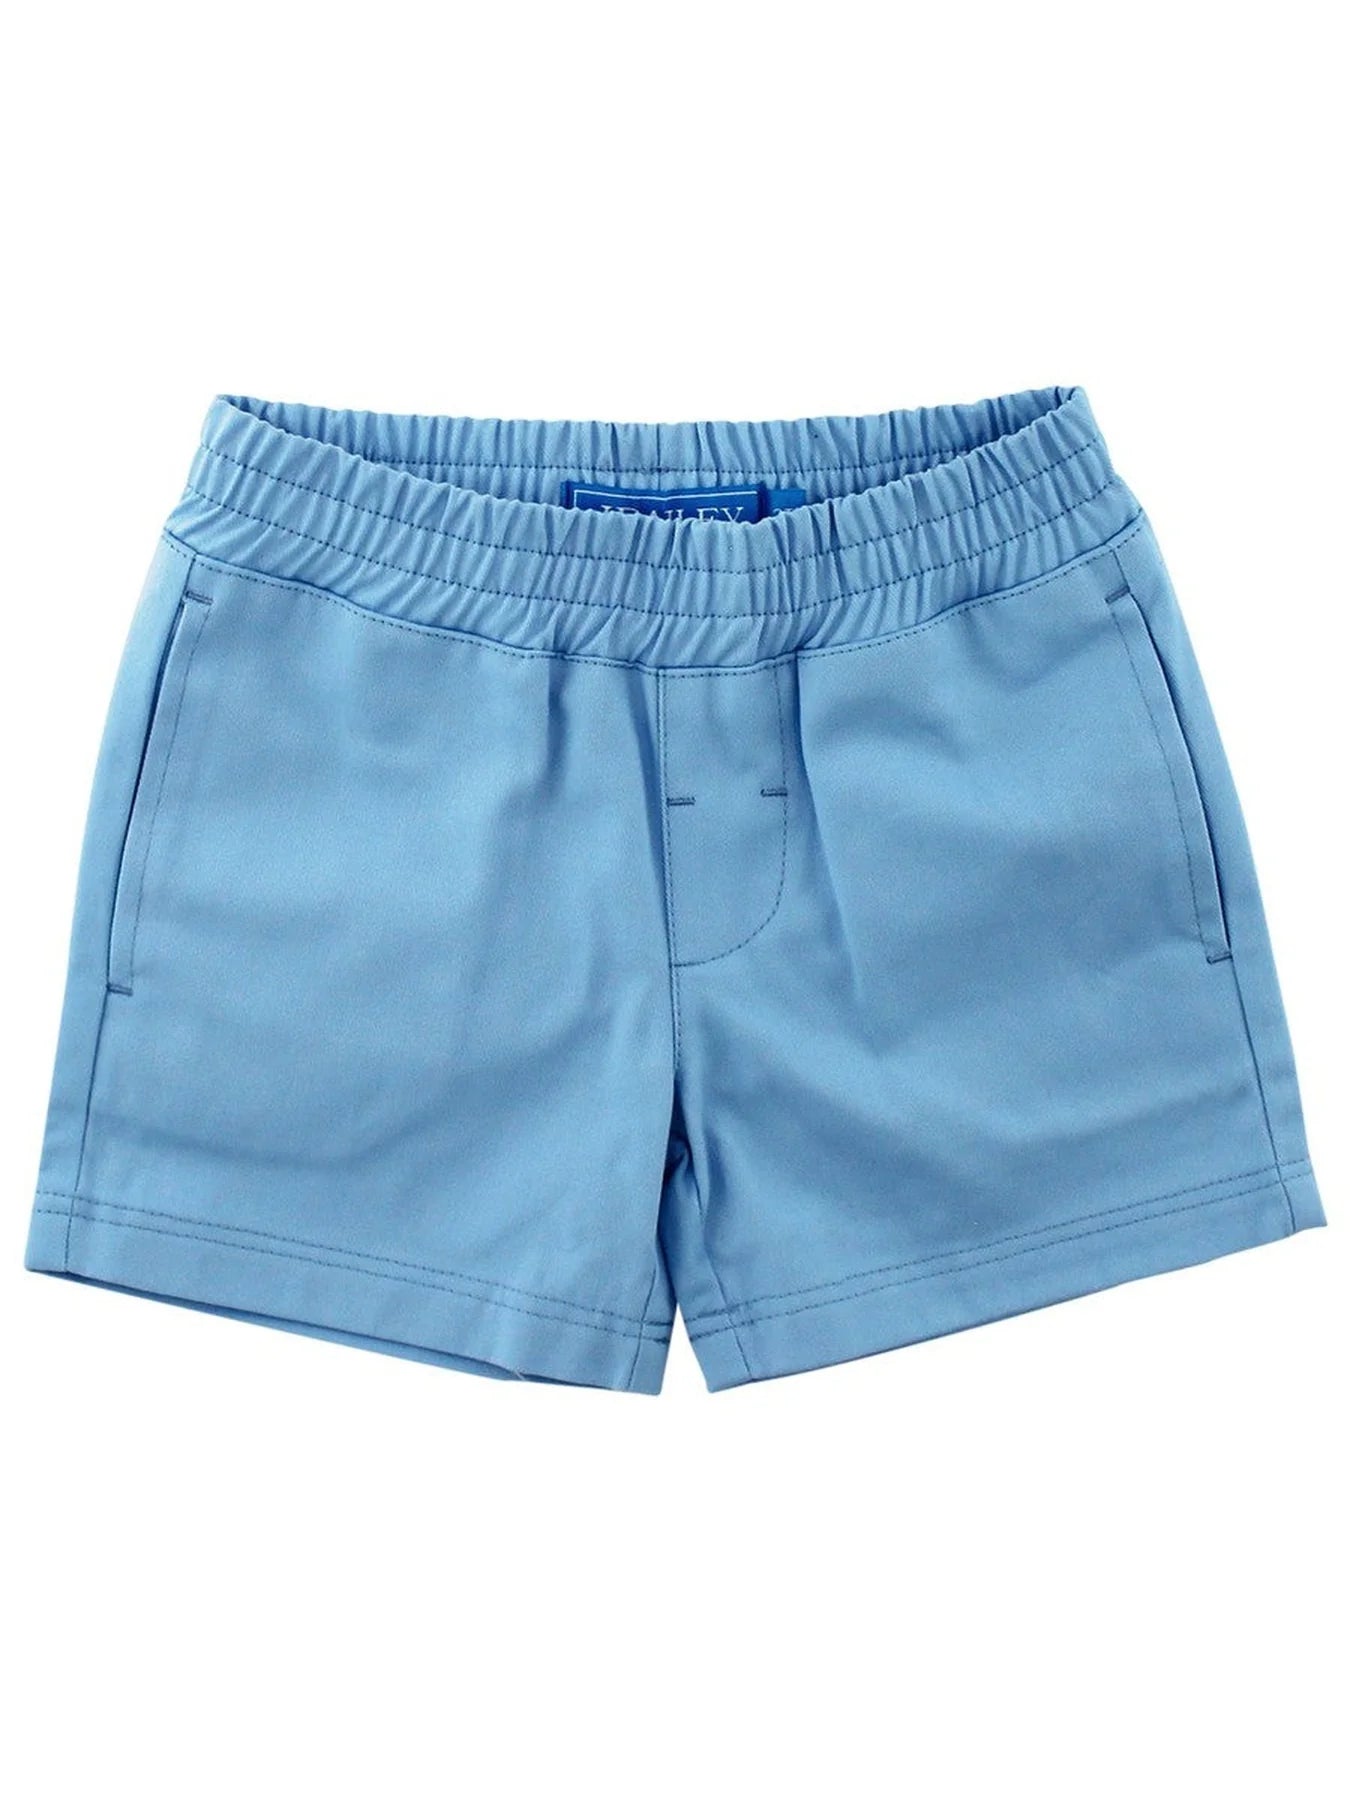 Harbor Blue Pull on Shorts